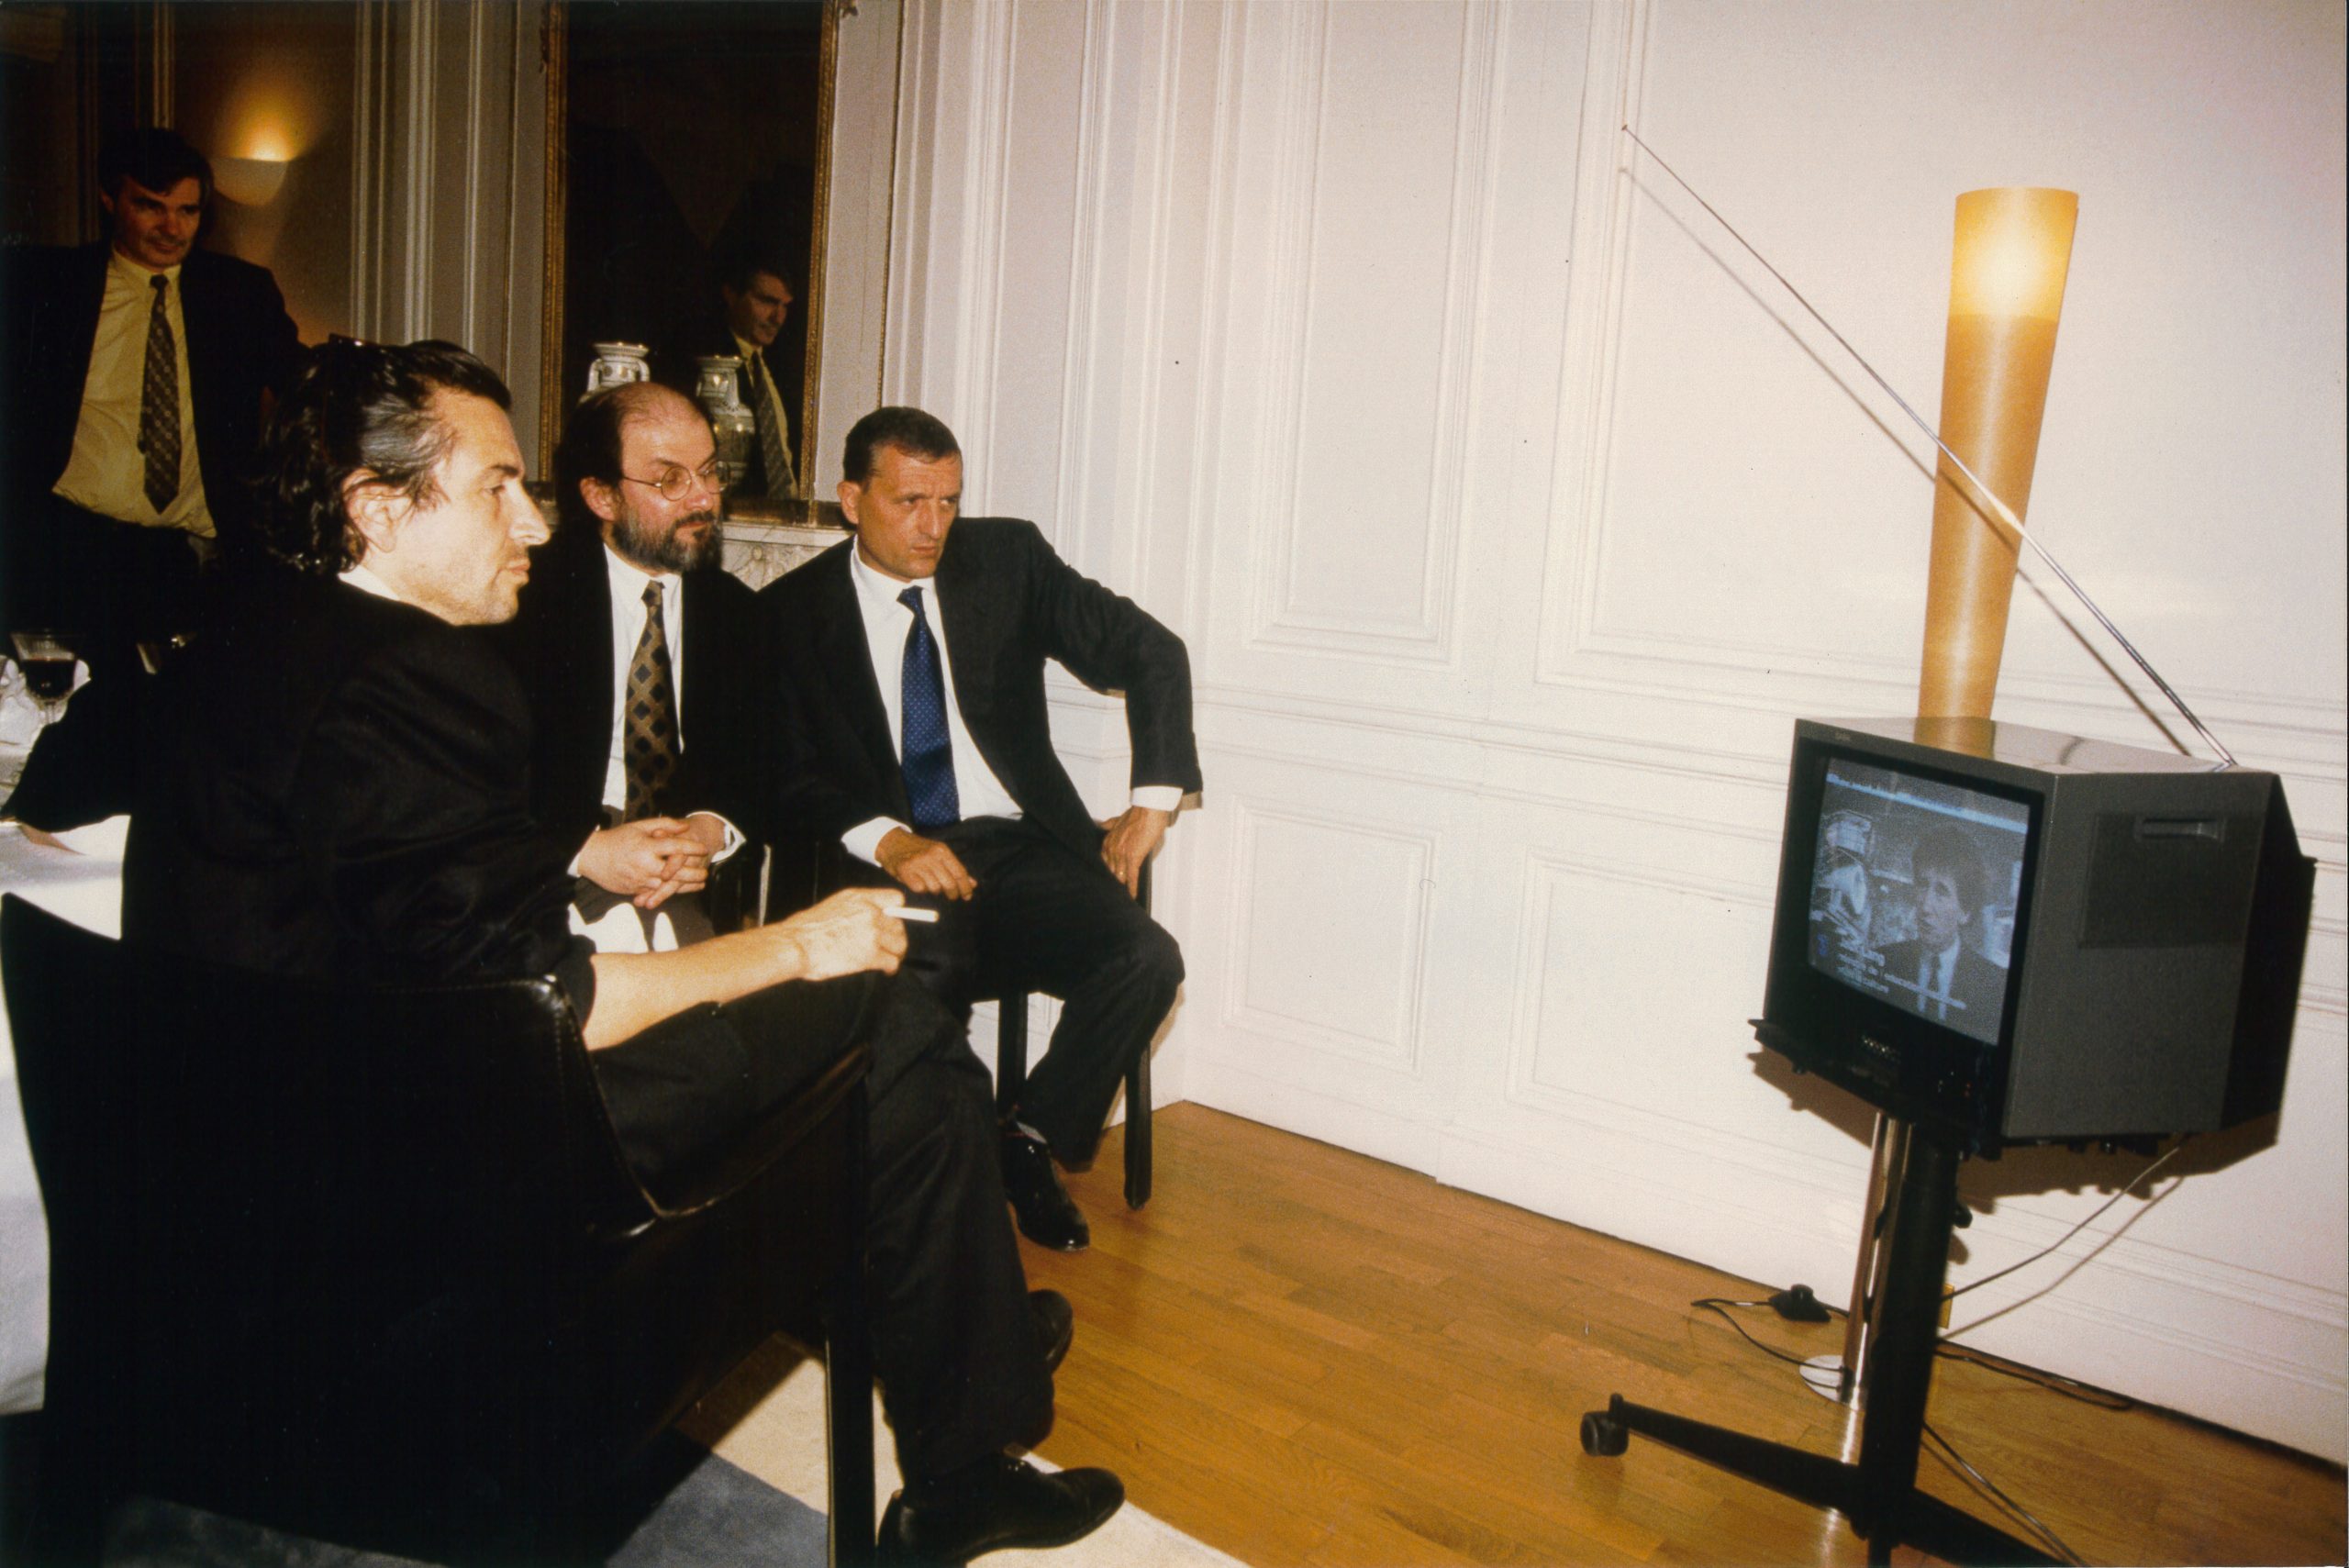 Bernard-Henri Lévy, Salman Rushdie and François Léotard.